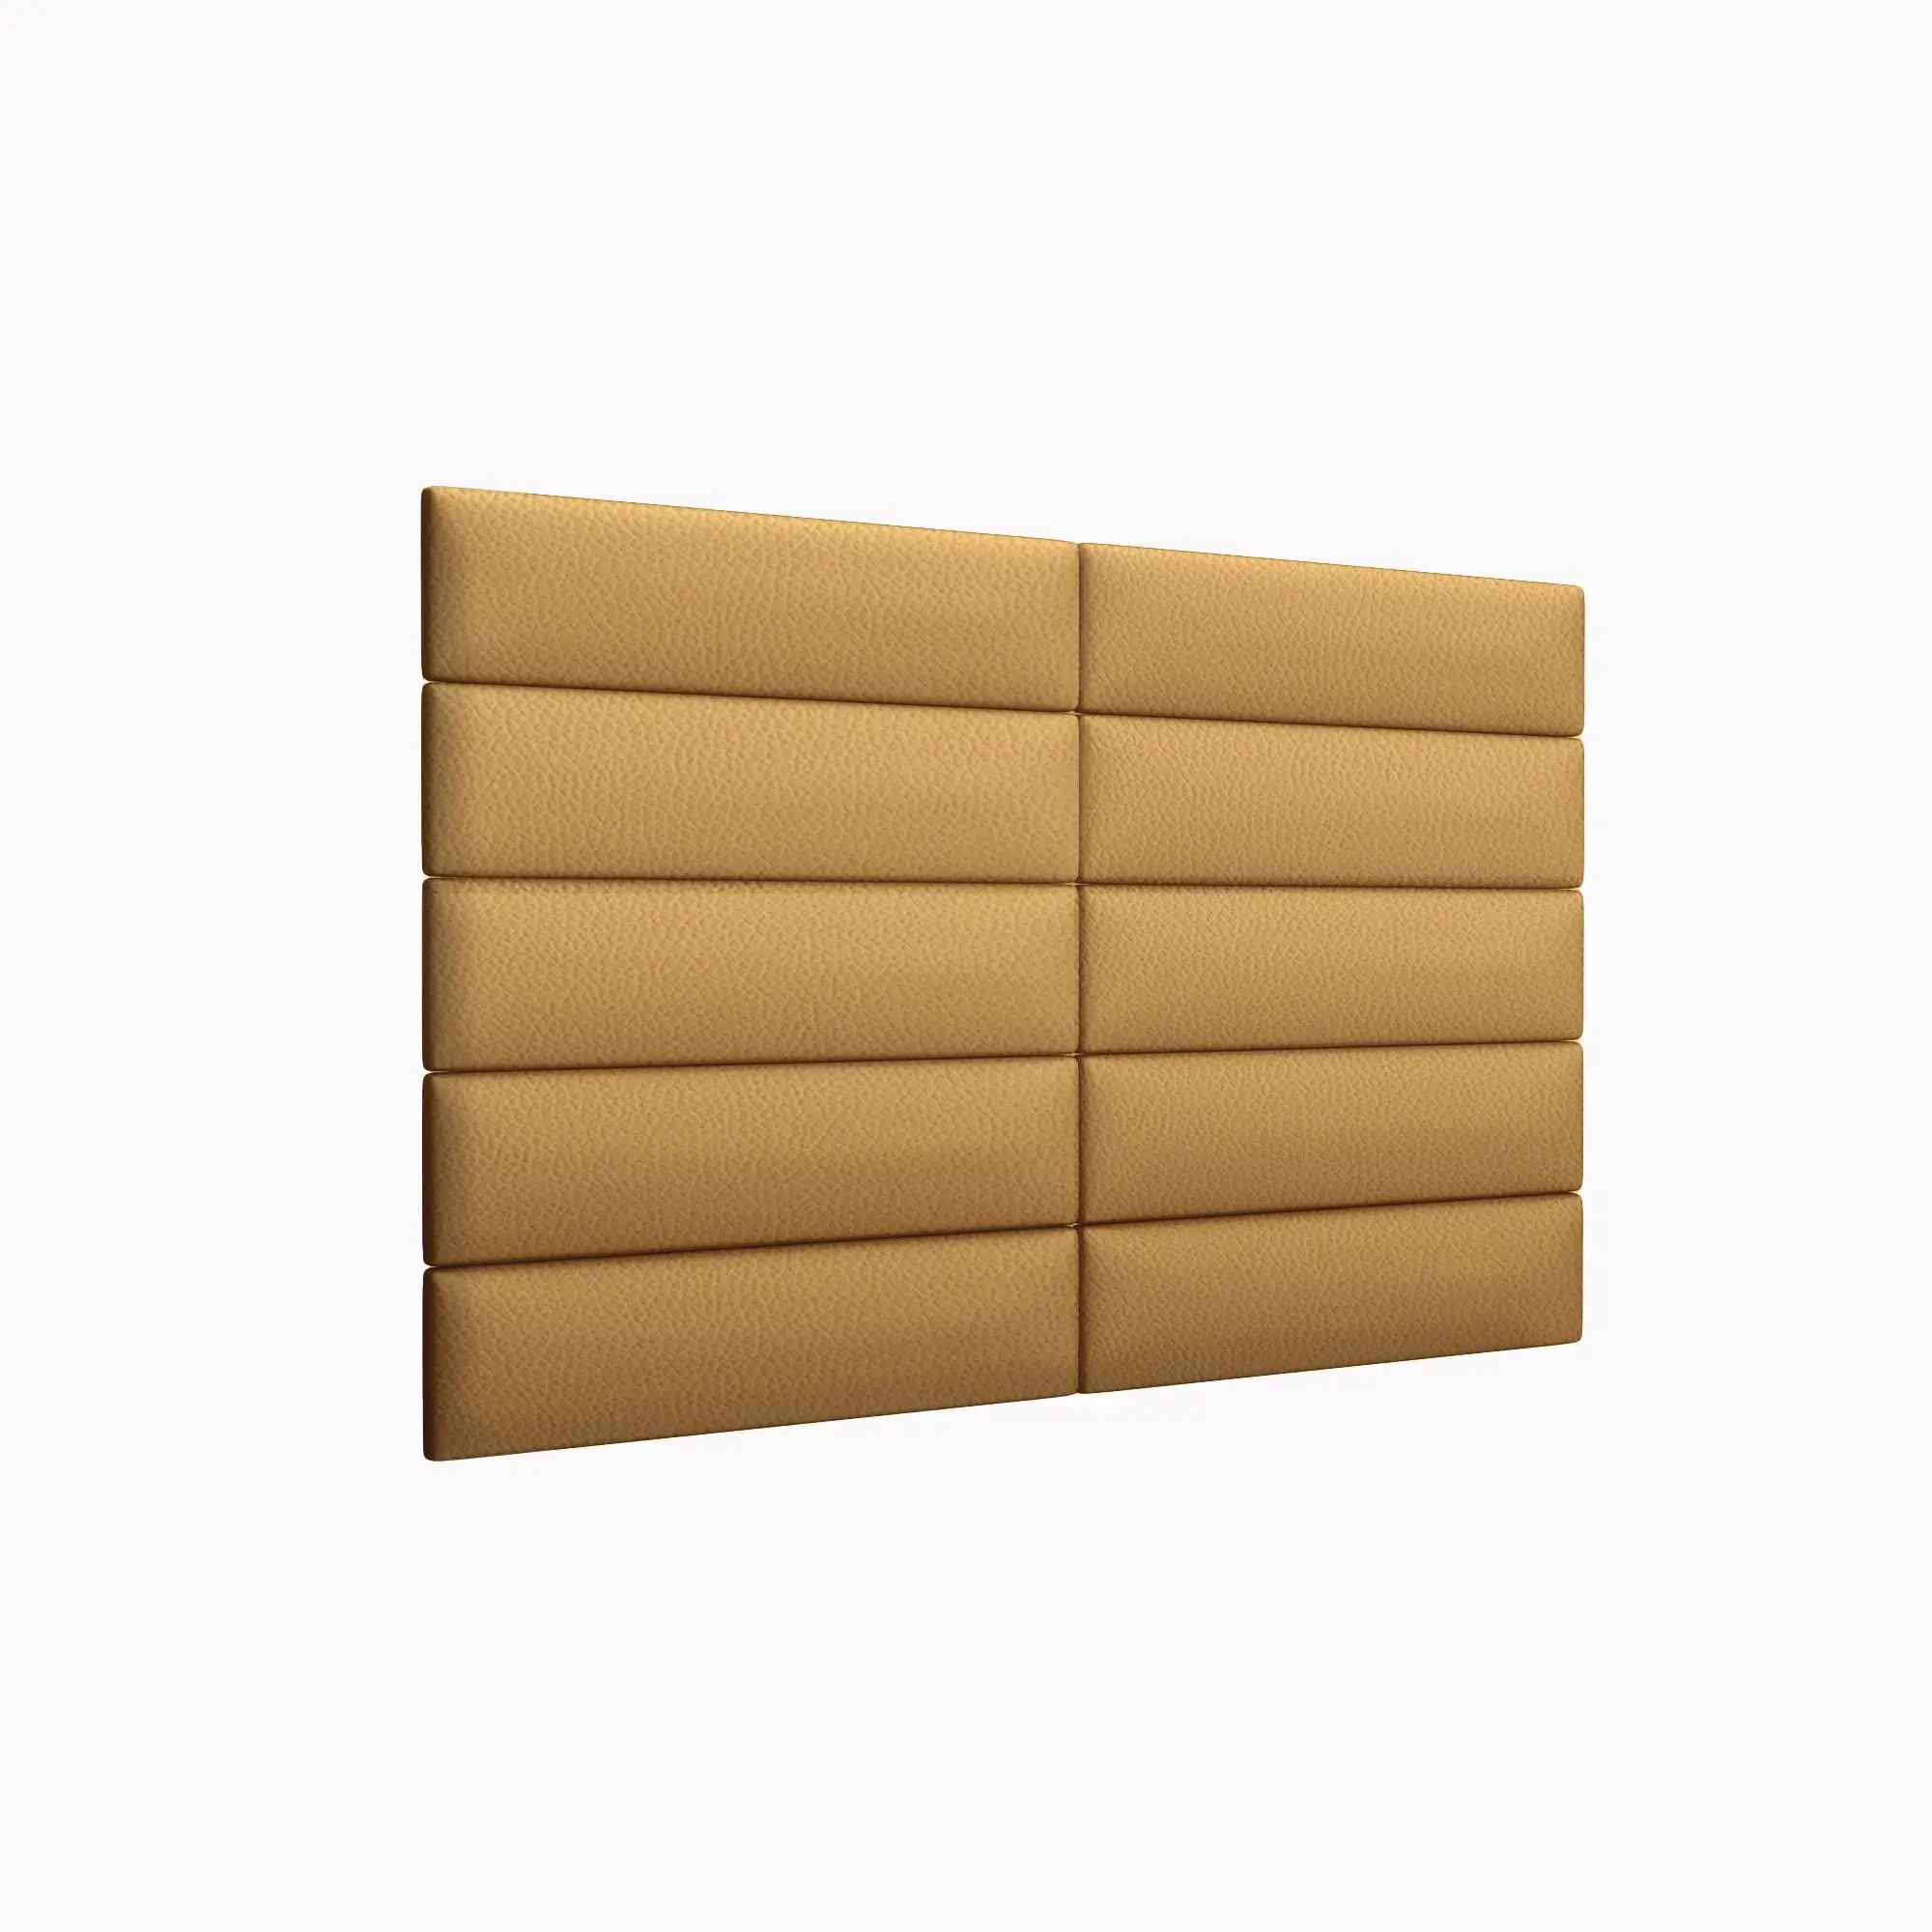 Стеновая панель Eco Leather Gold 15х60 см 4 шт.